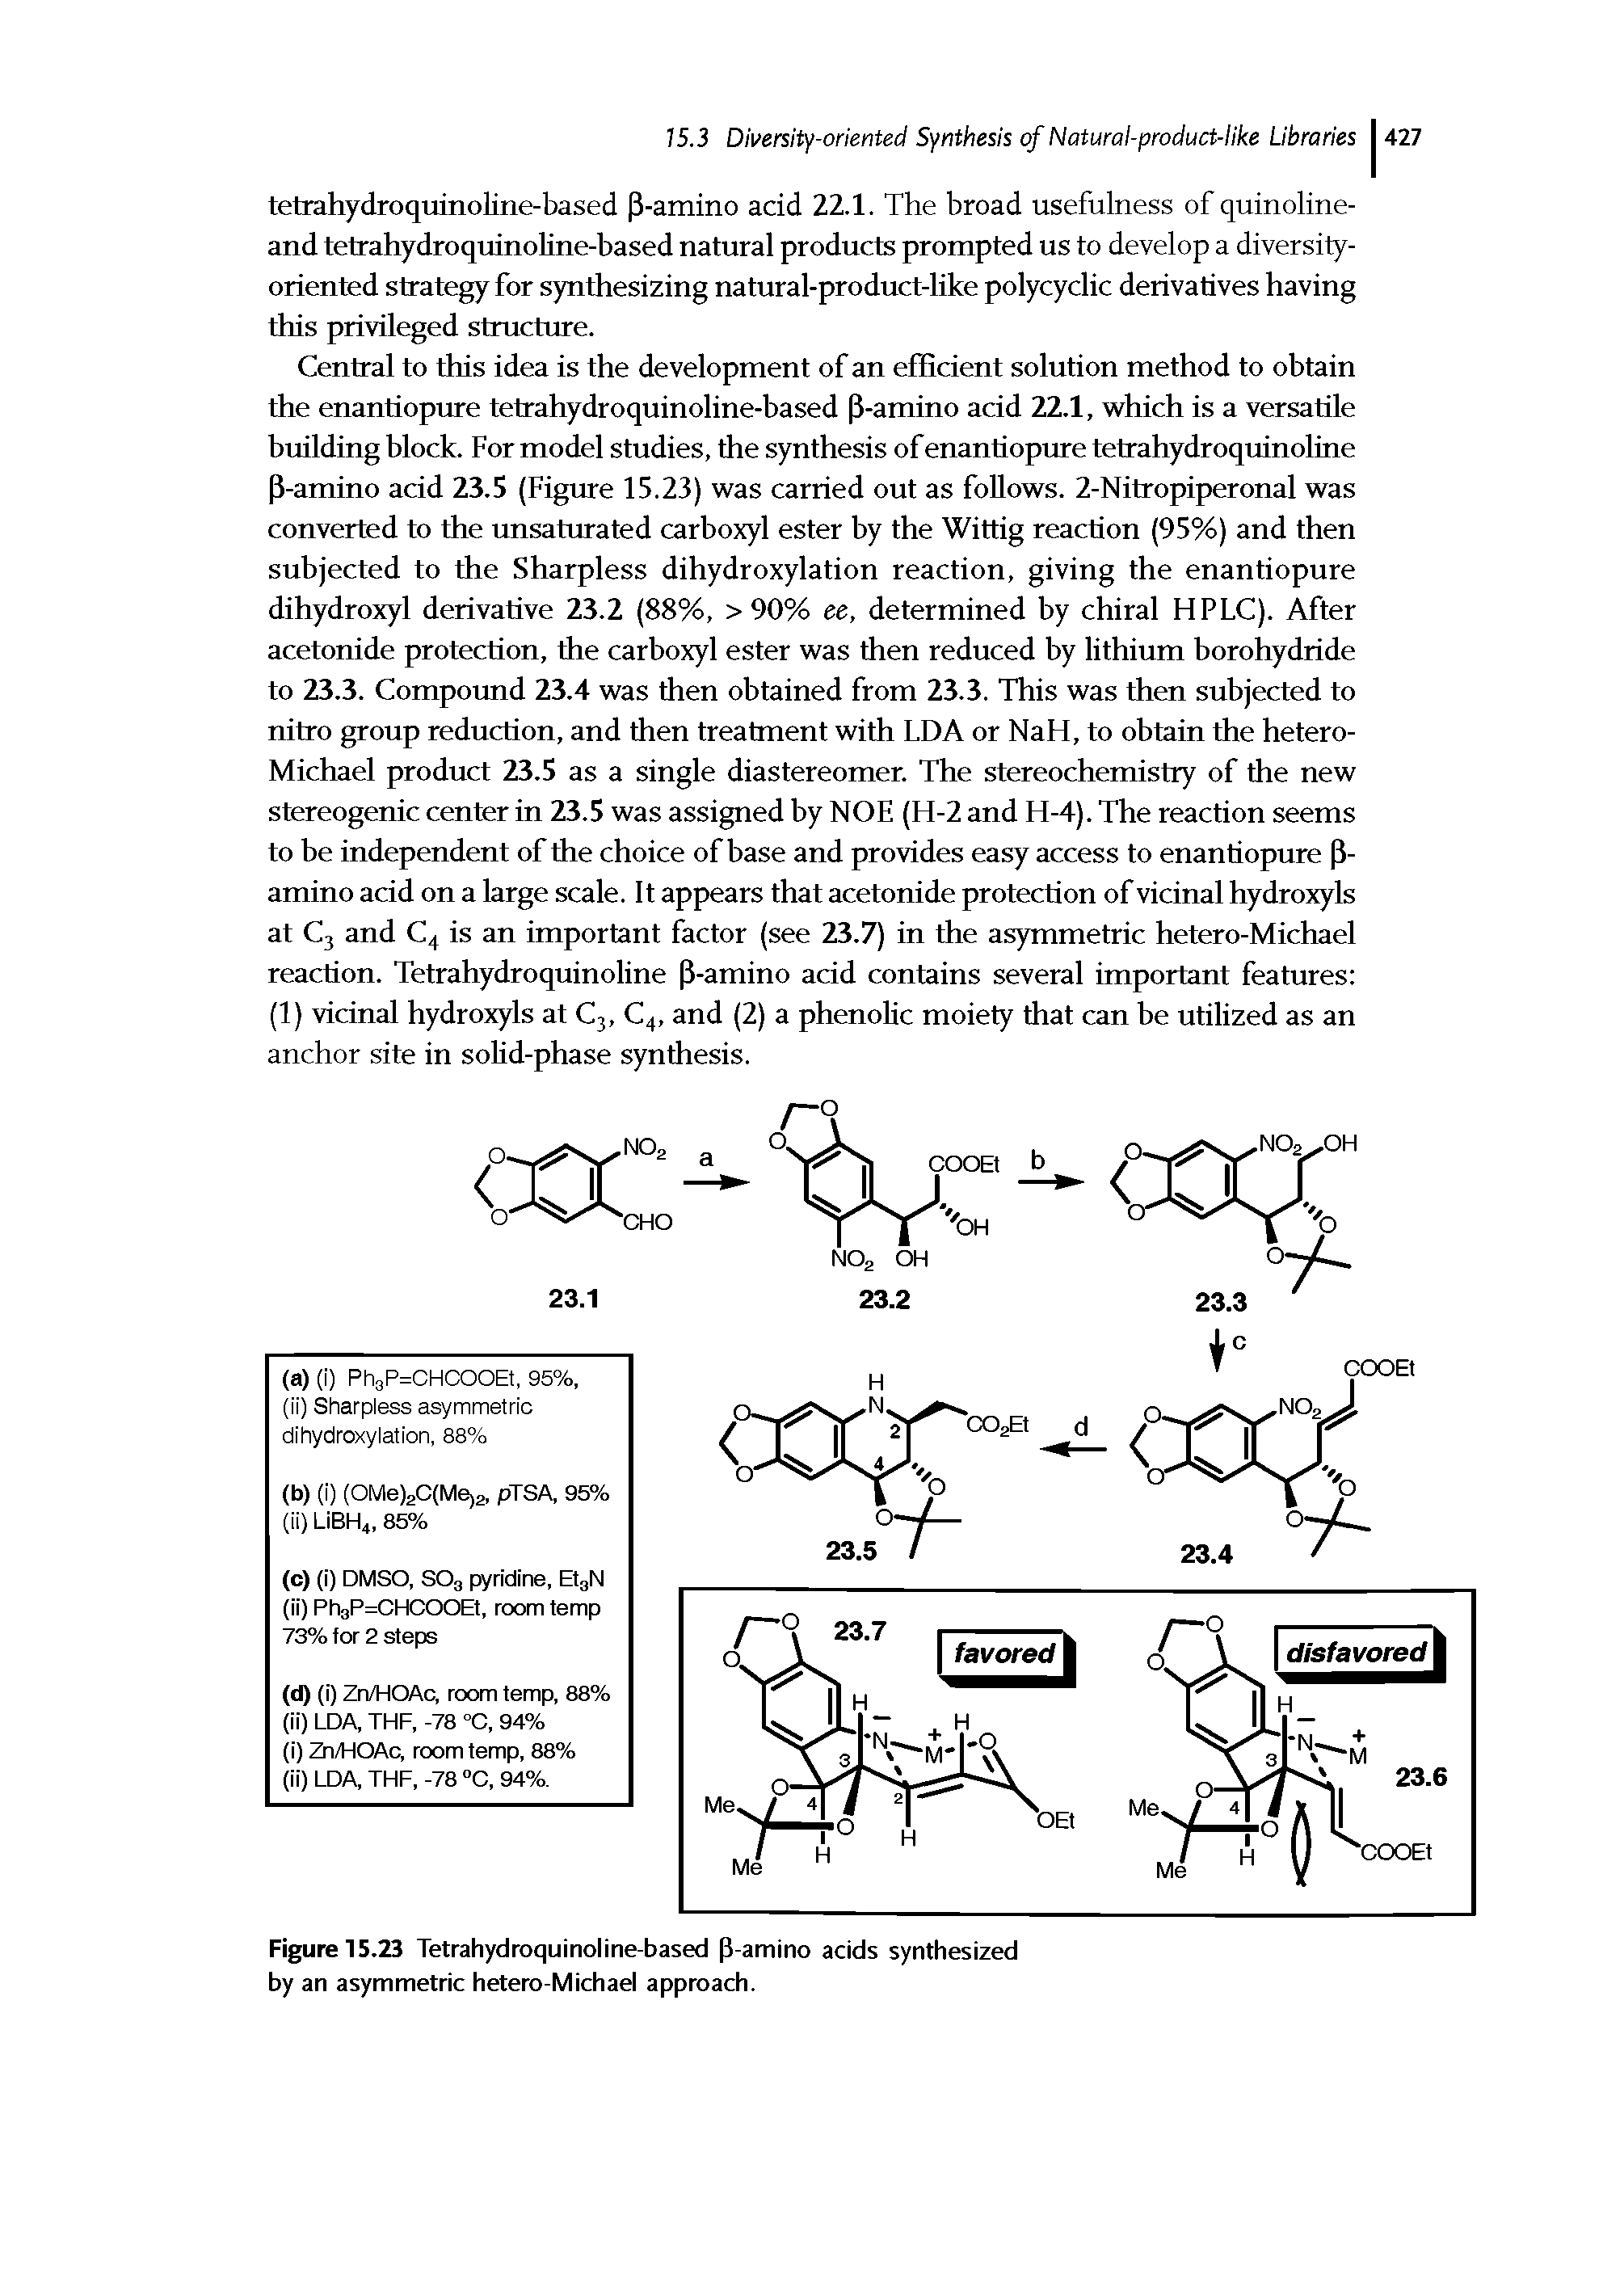 Figure 15.23 Tetrahydroquinoline-based p-amino acids synthesized by an asymmetric hetero-Michael approach.